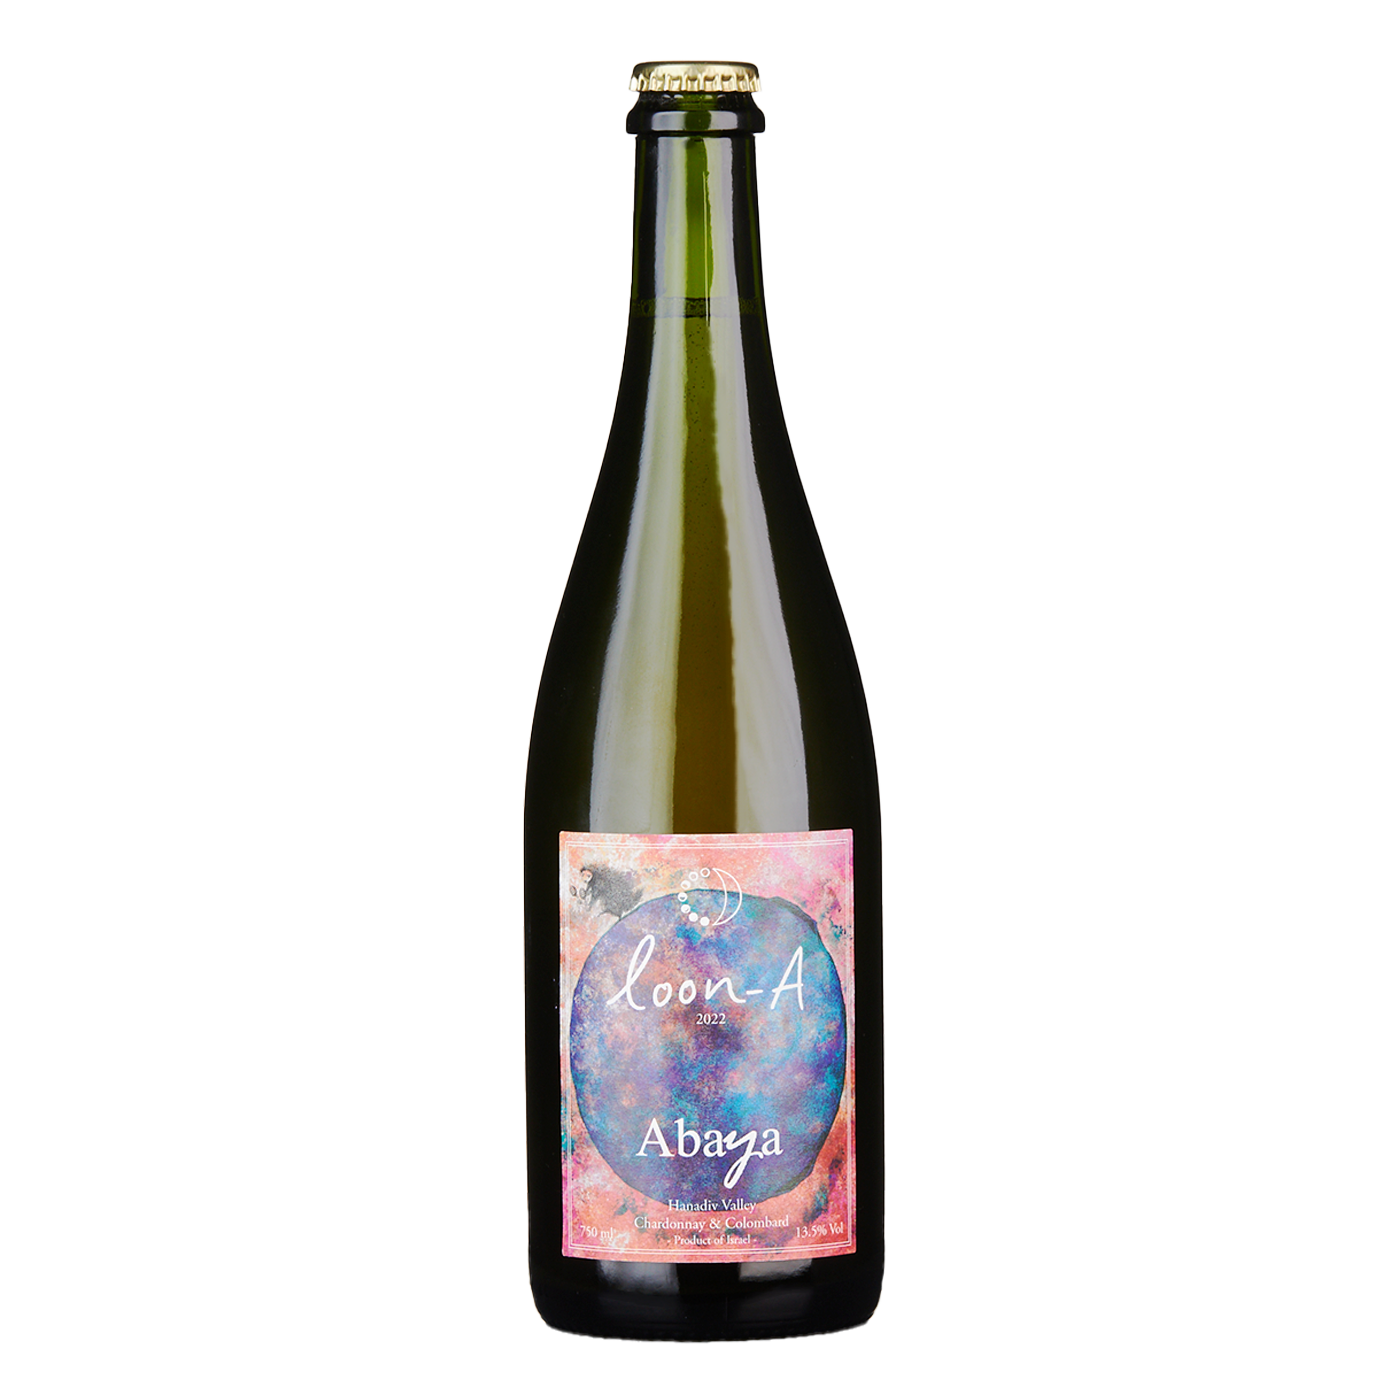 Abaya - Loon - A Pet Nat - [winest]